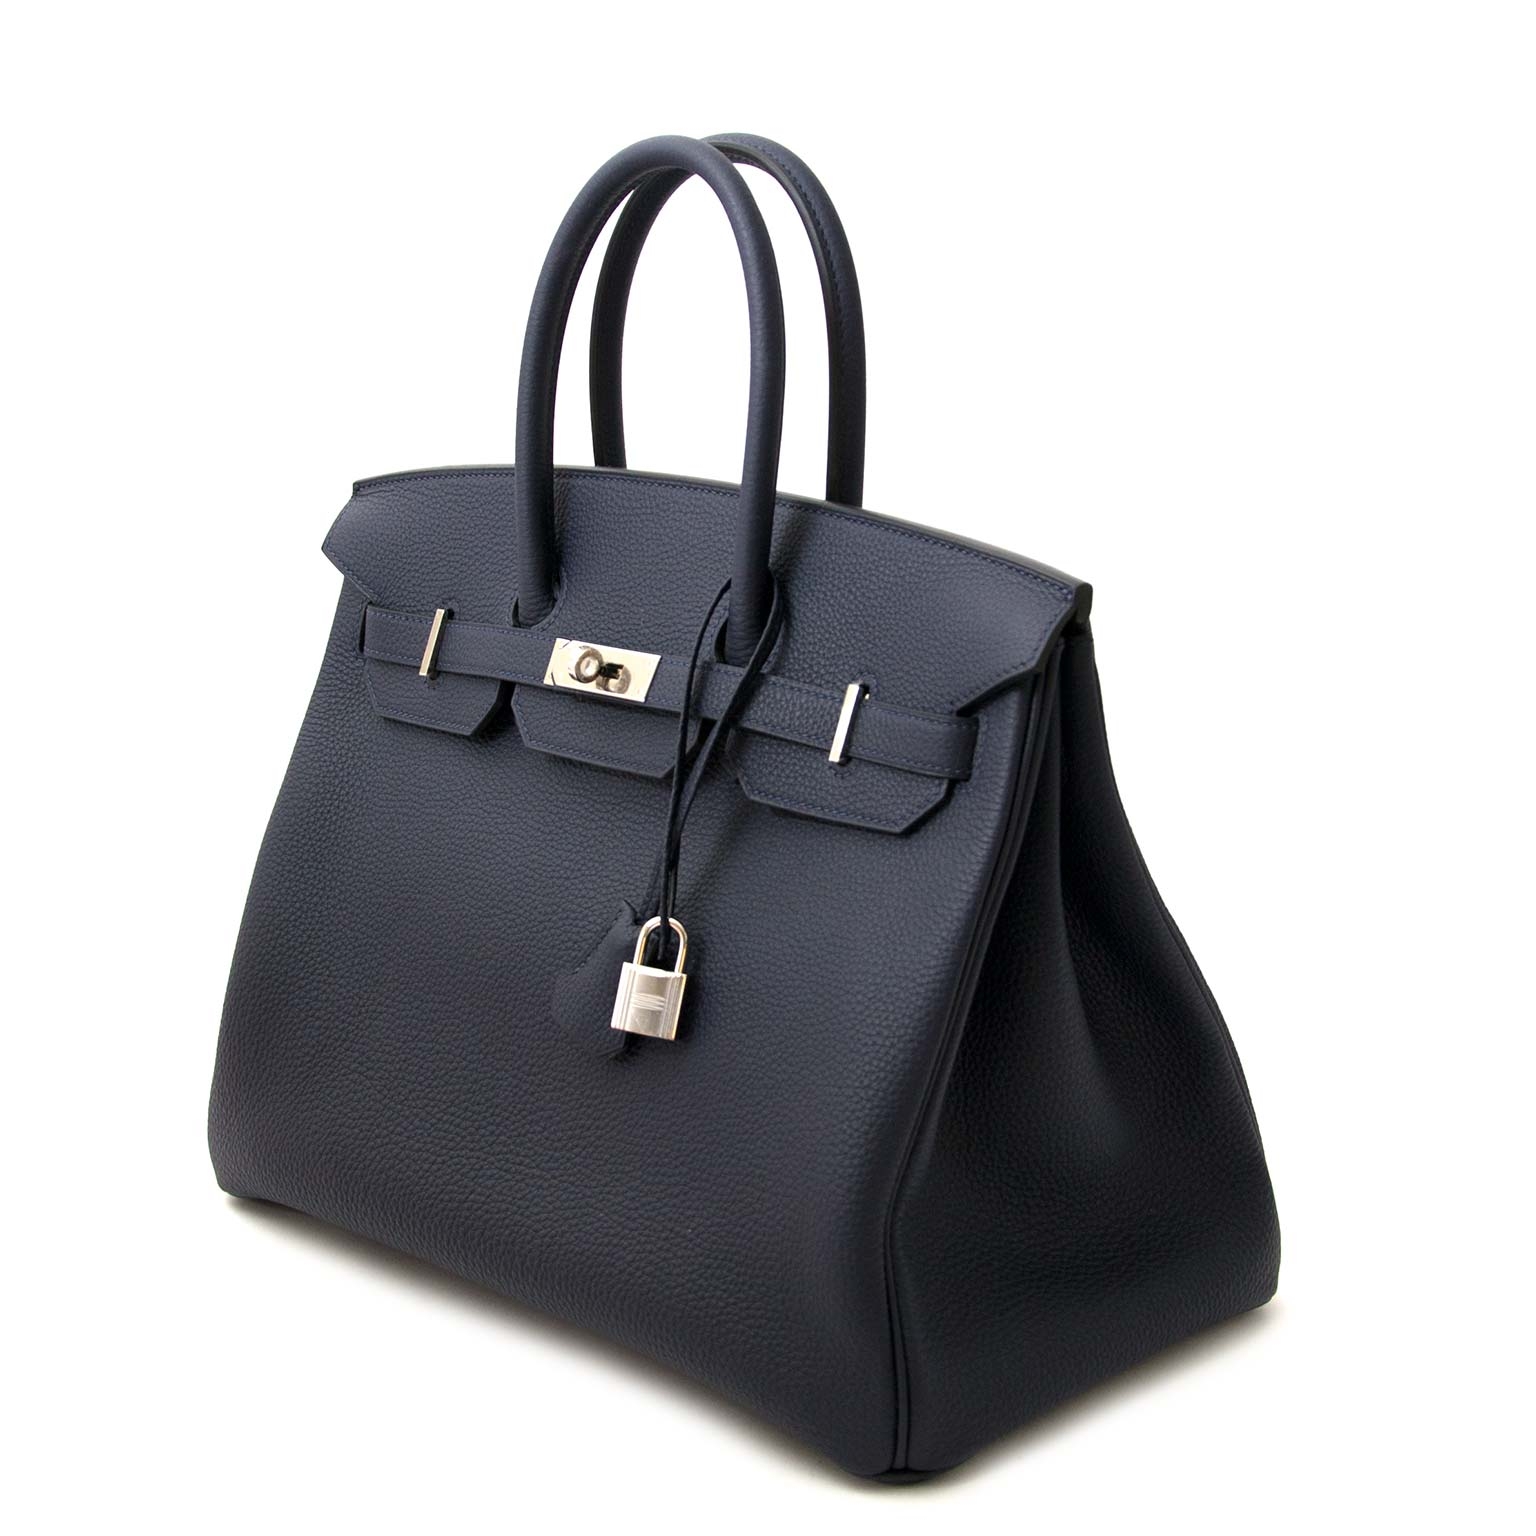 Hermès 35cm Birkin, Bleu Nuit Togo Leather, Palladium Hardware